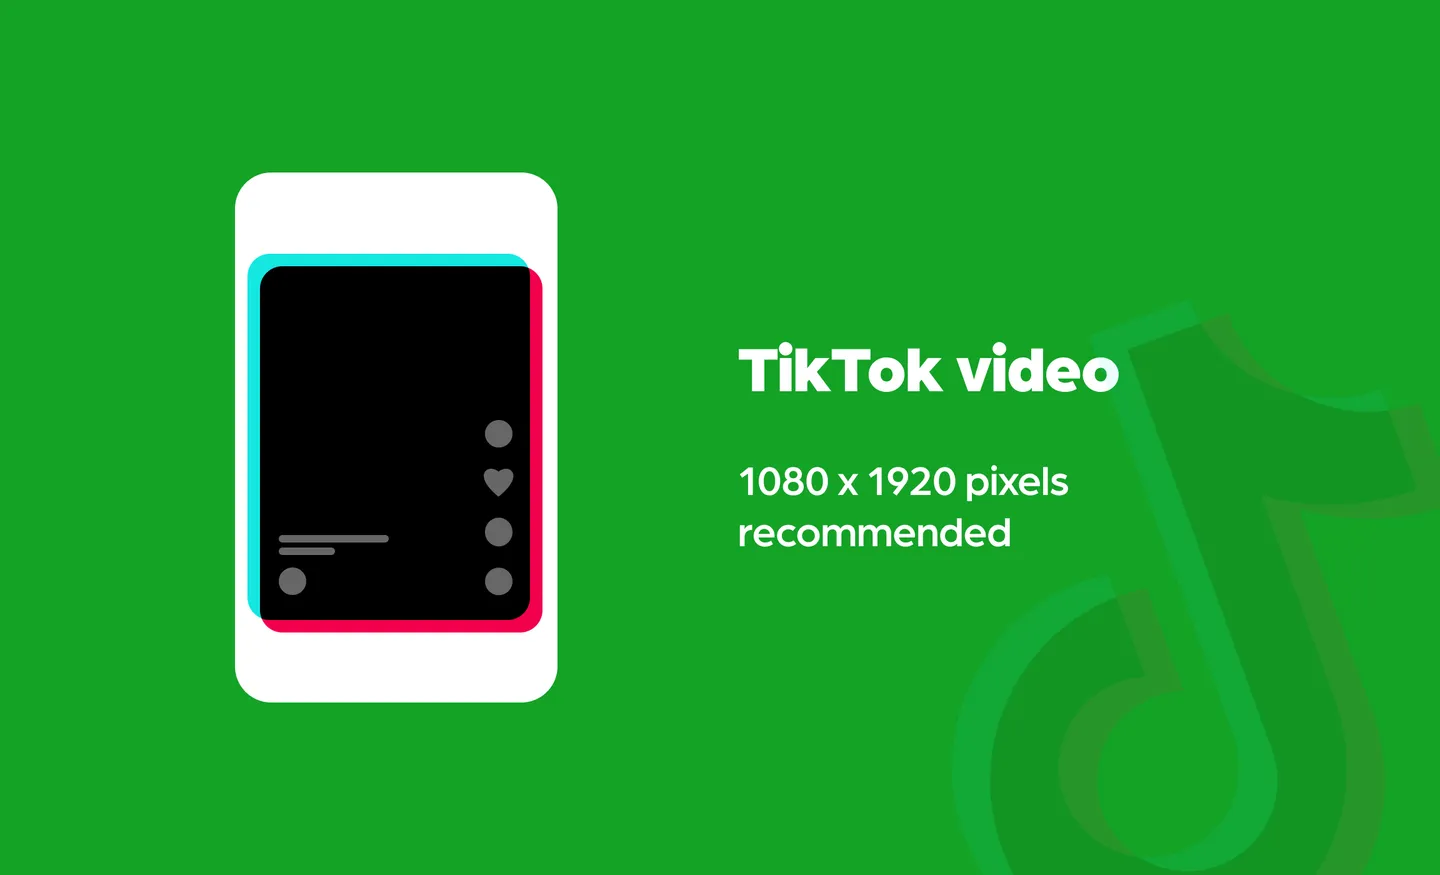 TikTok video size